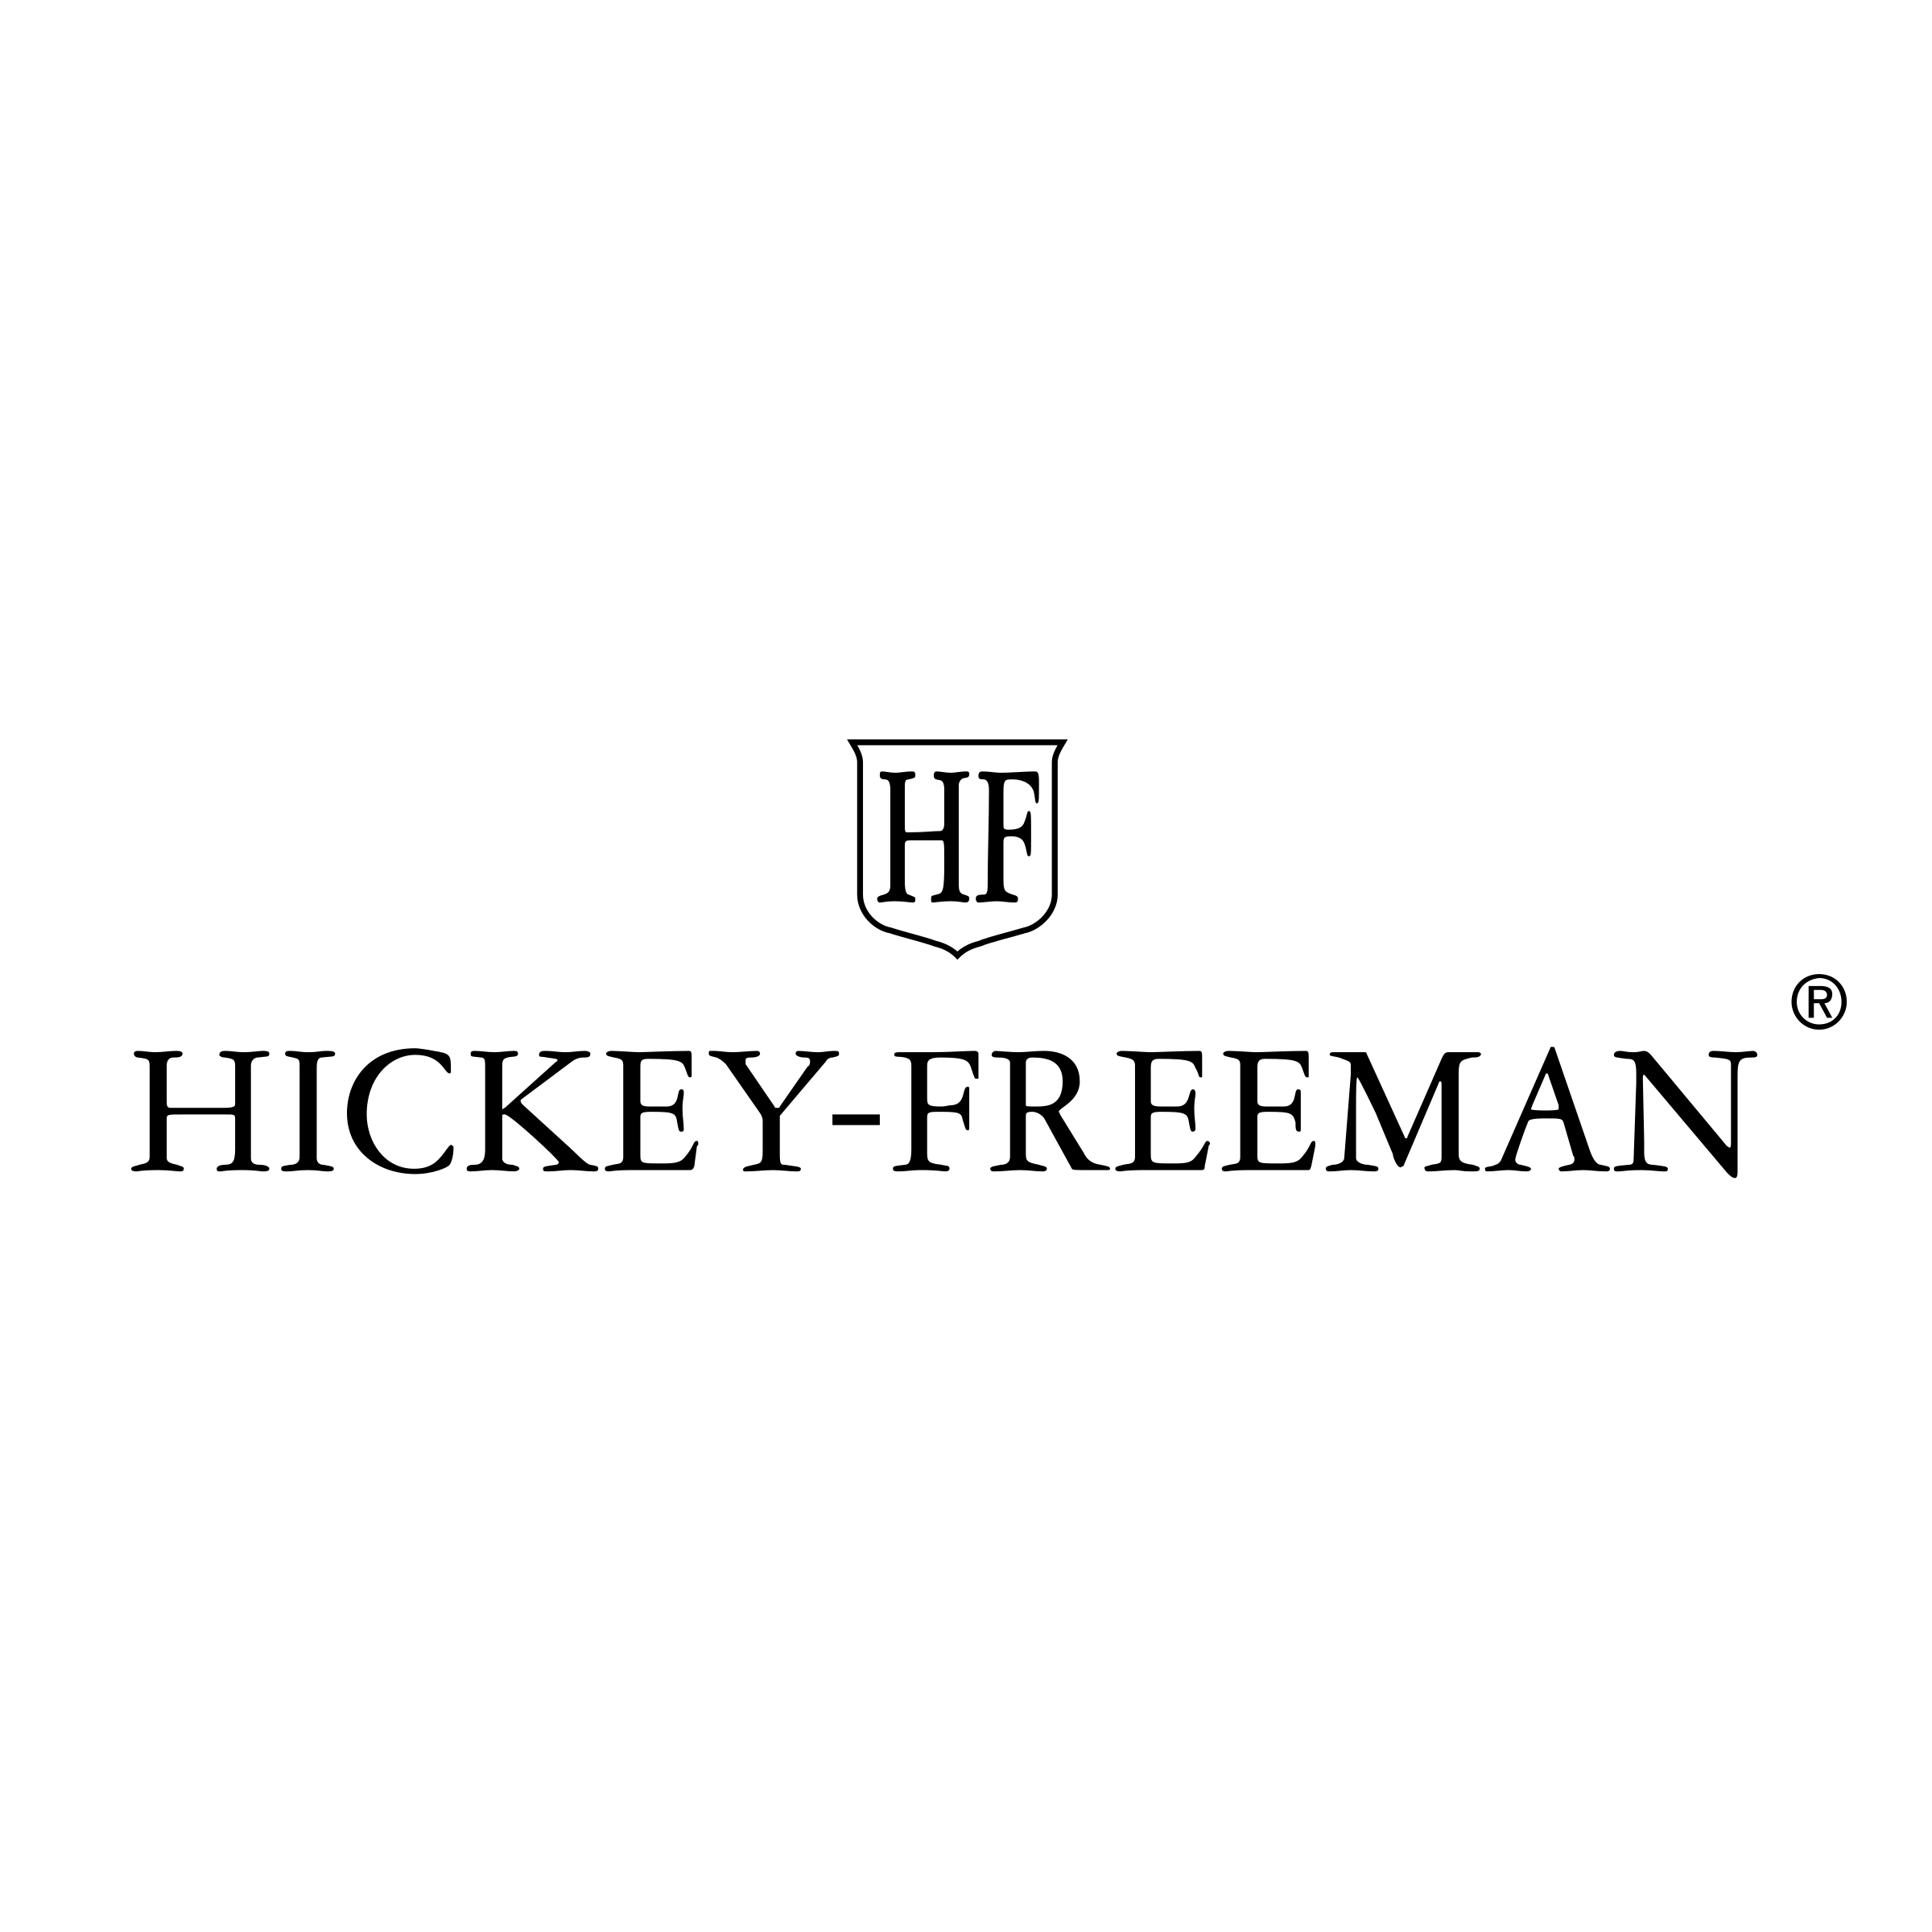 Hickey Logo - Hickey Freeman Logo PNG Transparent & SVG Vector - Freebie Supply